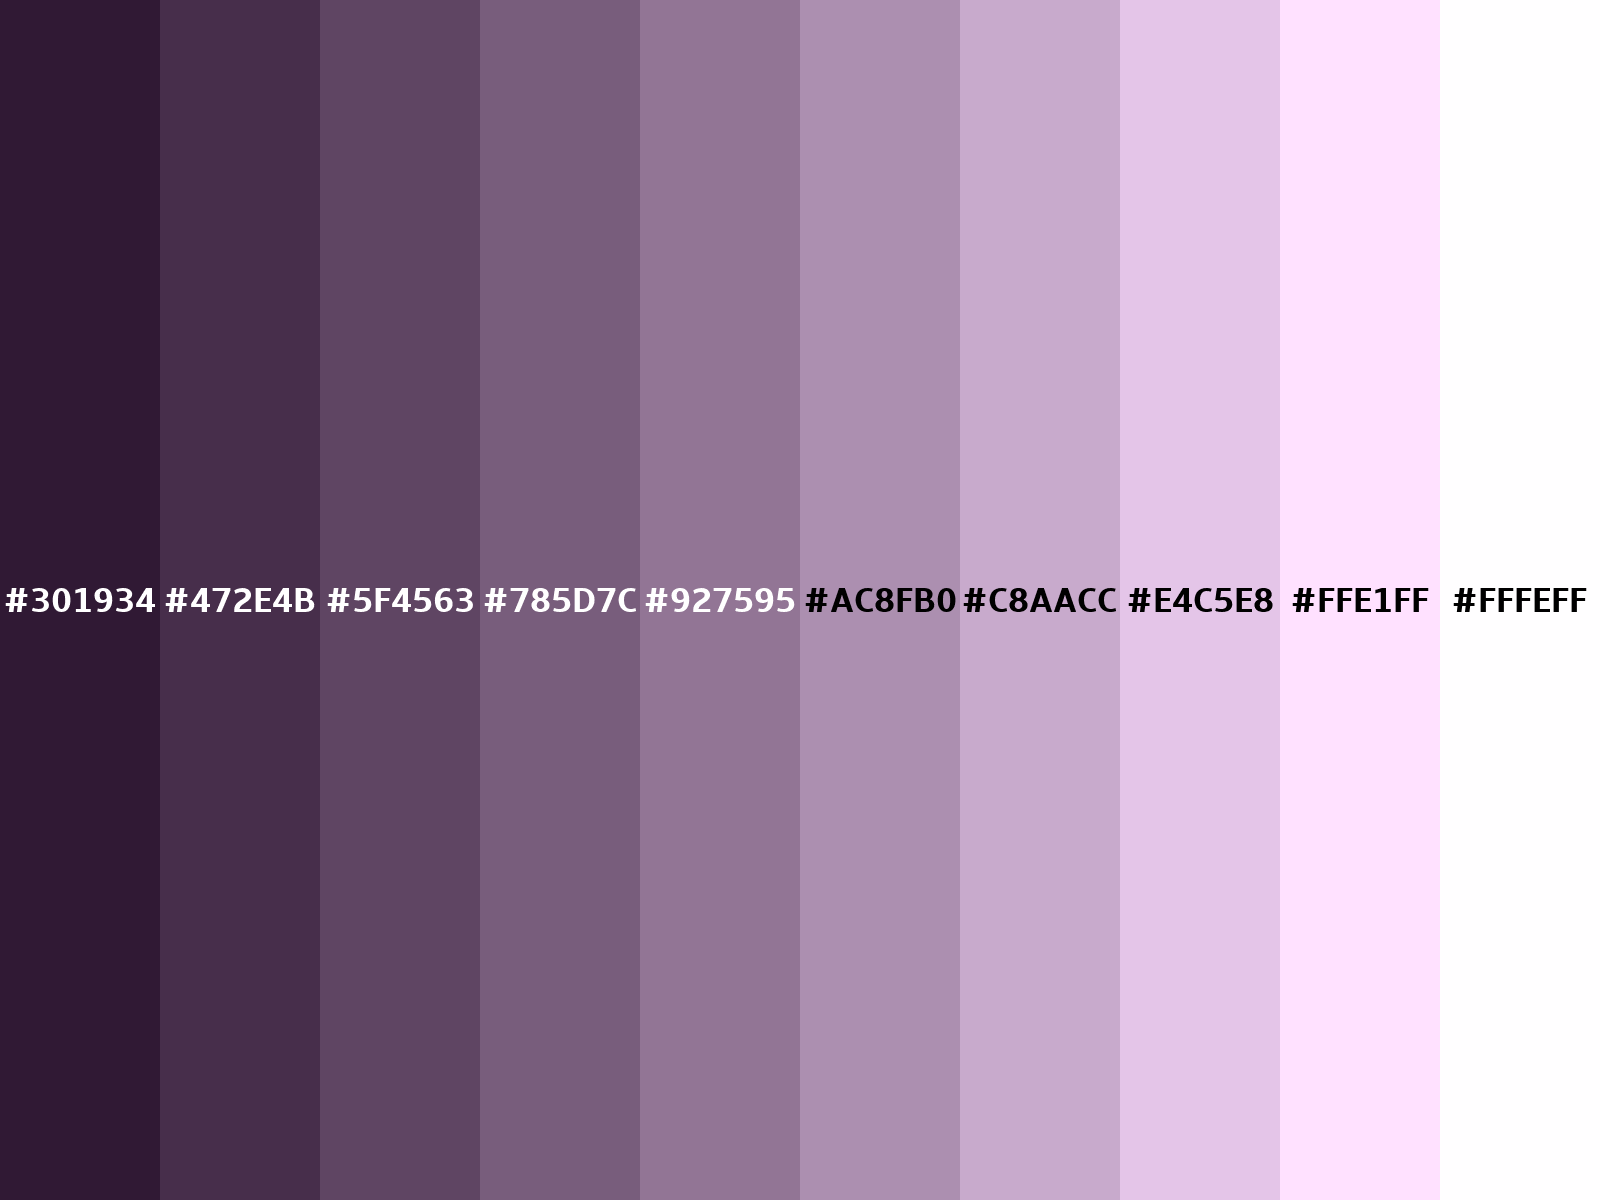 Converting Colors - Dark purple